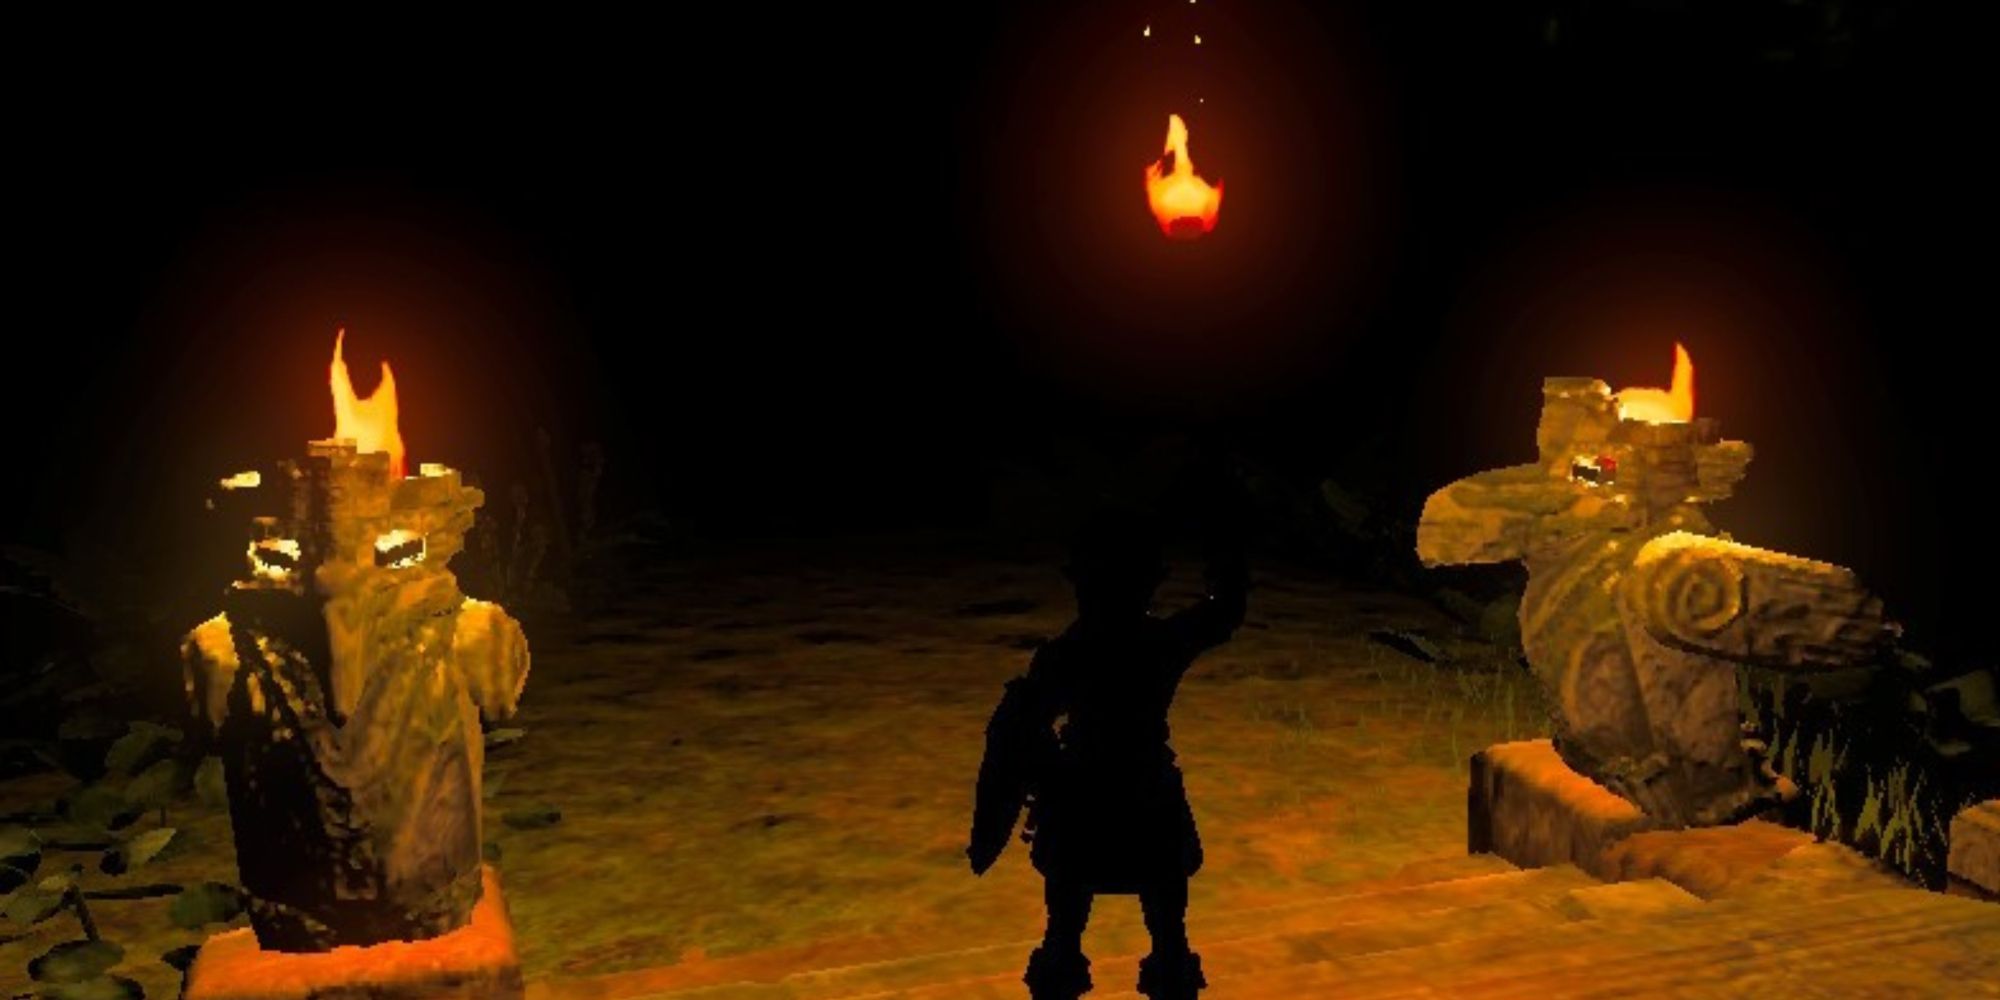 Link holding a torch in the dark in Thyphlo Ruins in BOTW